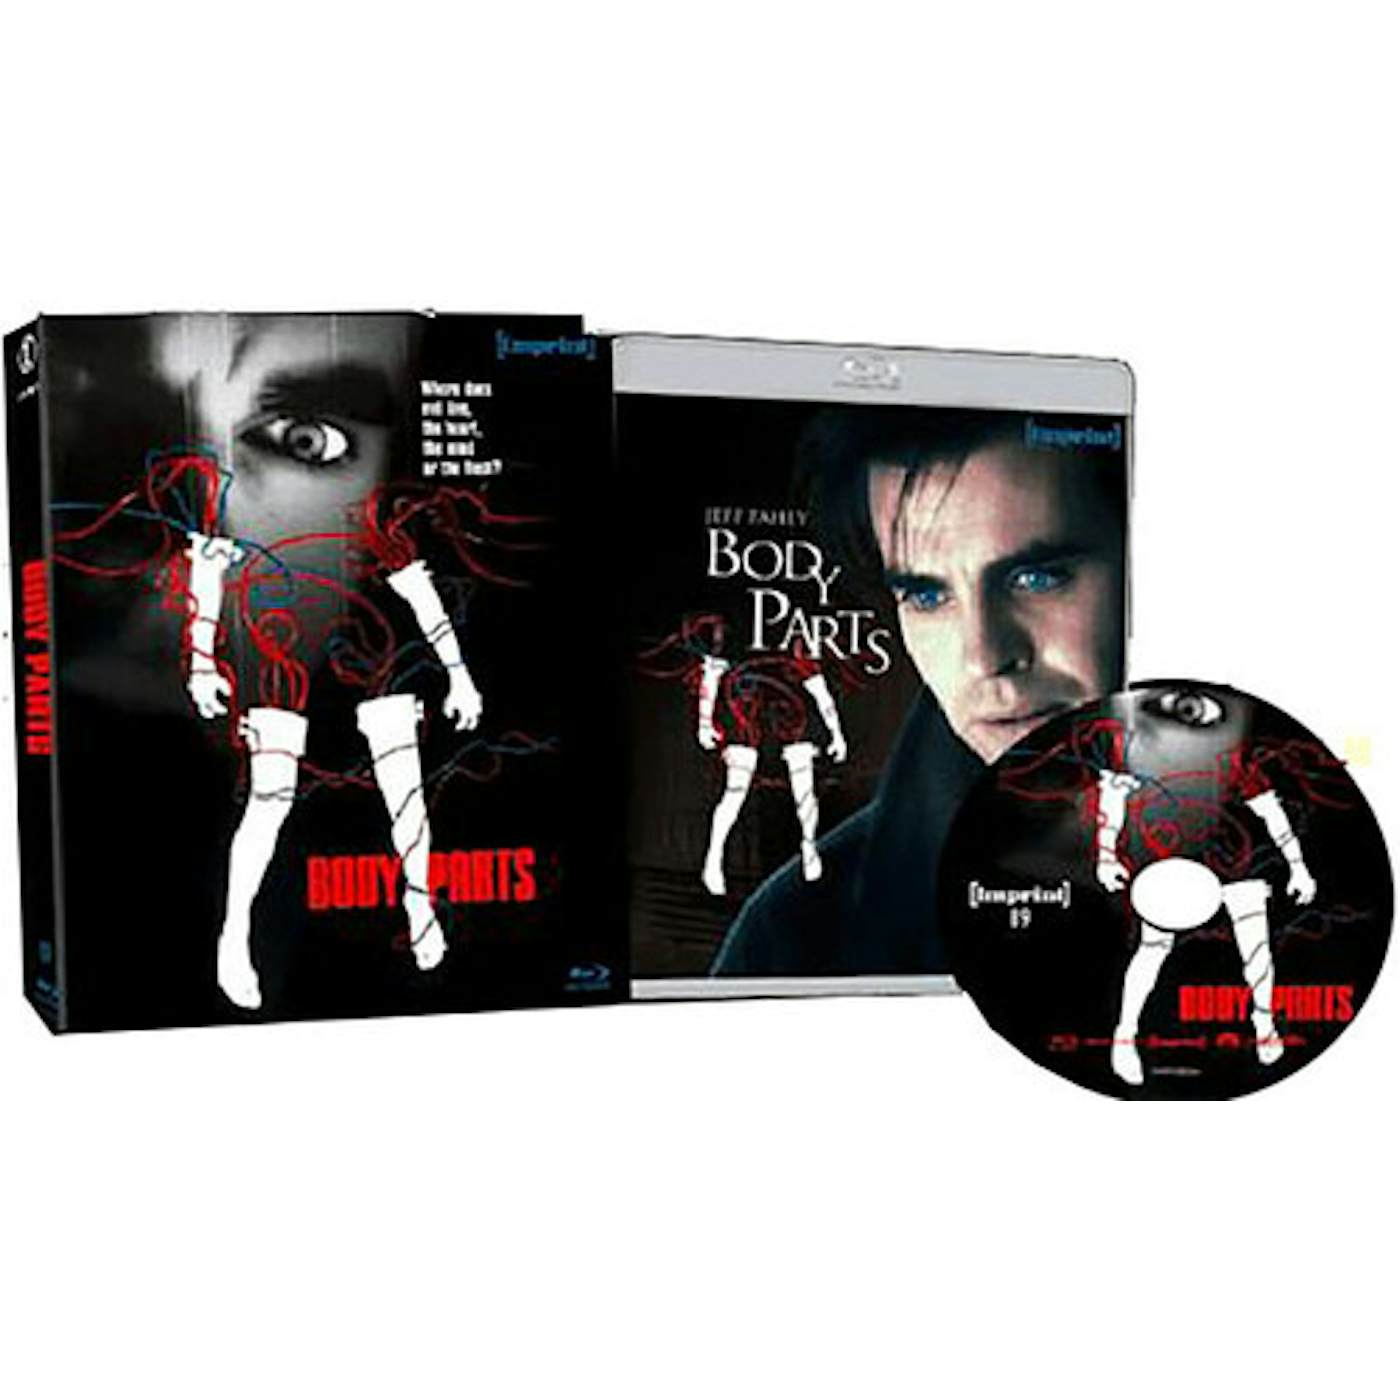 BODY PARTS Blu-ray